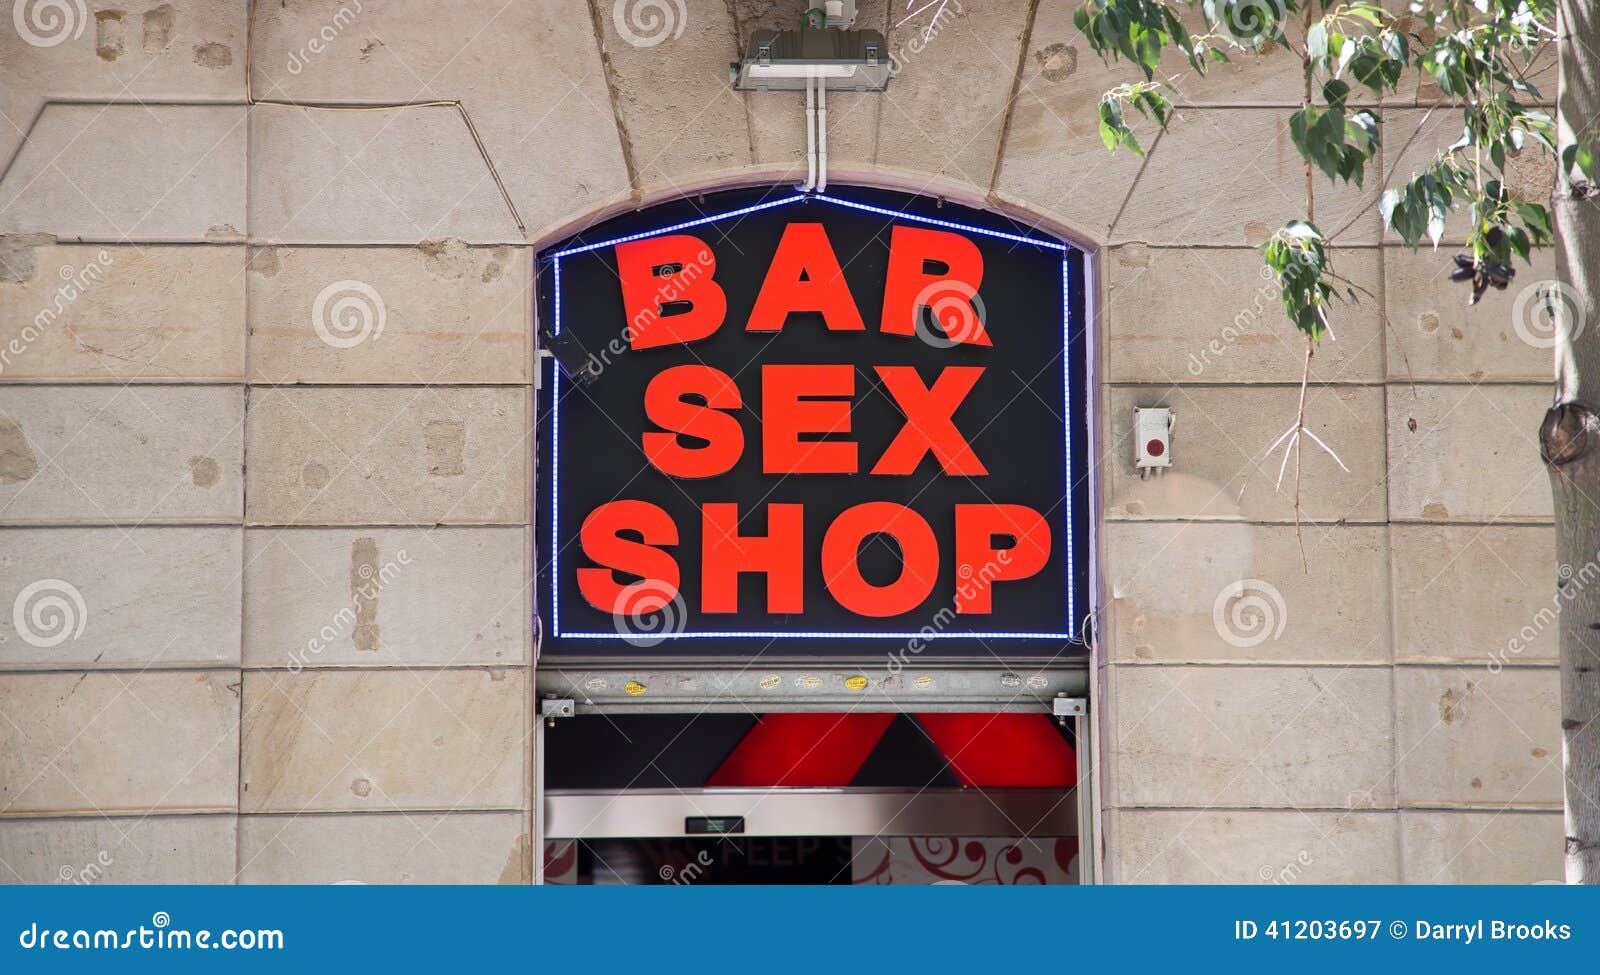 Keep In Spain Barcelona Shops Sex